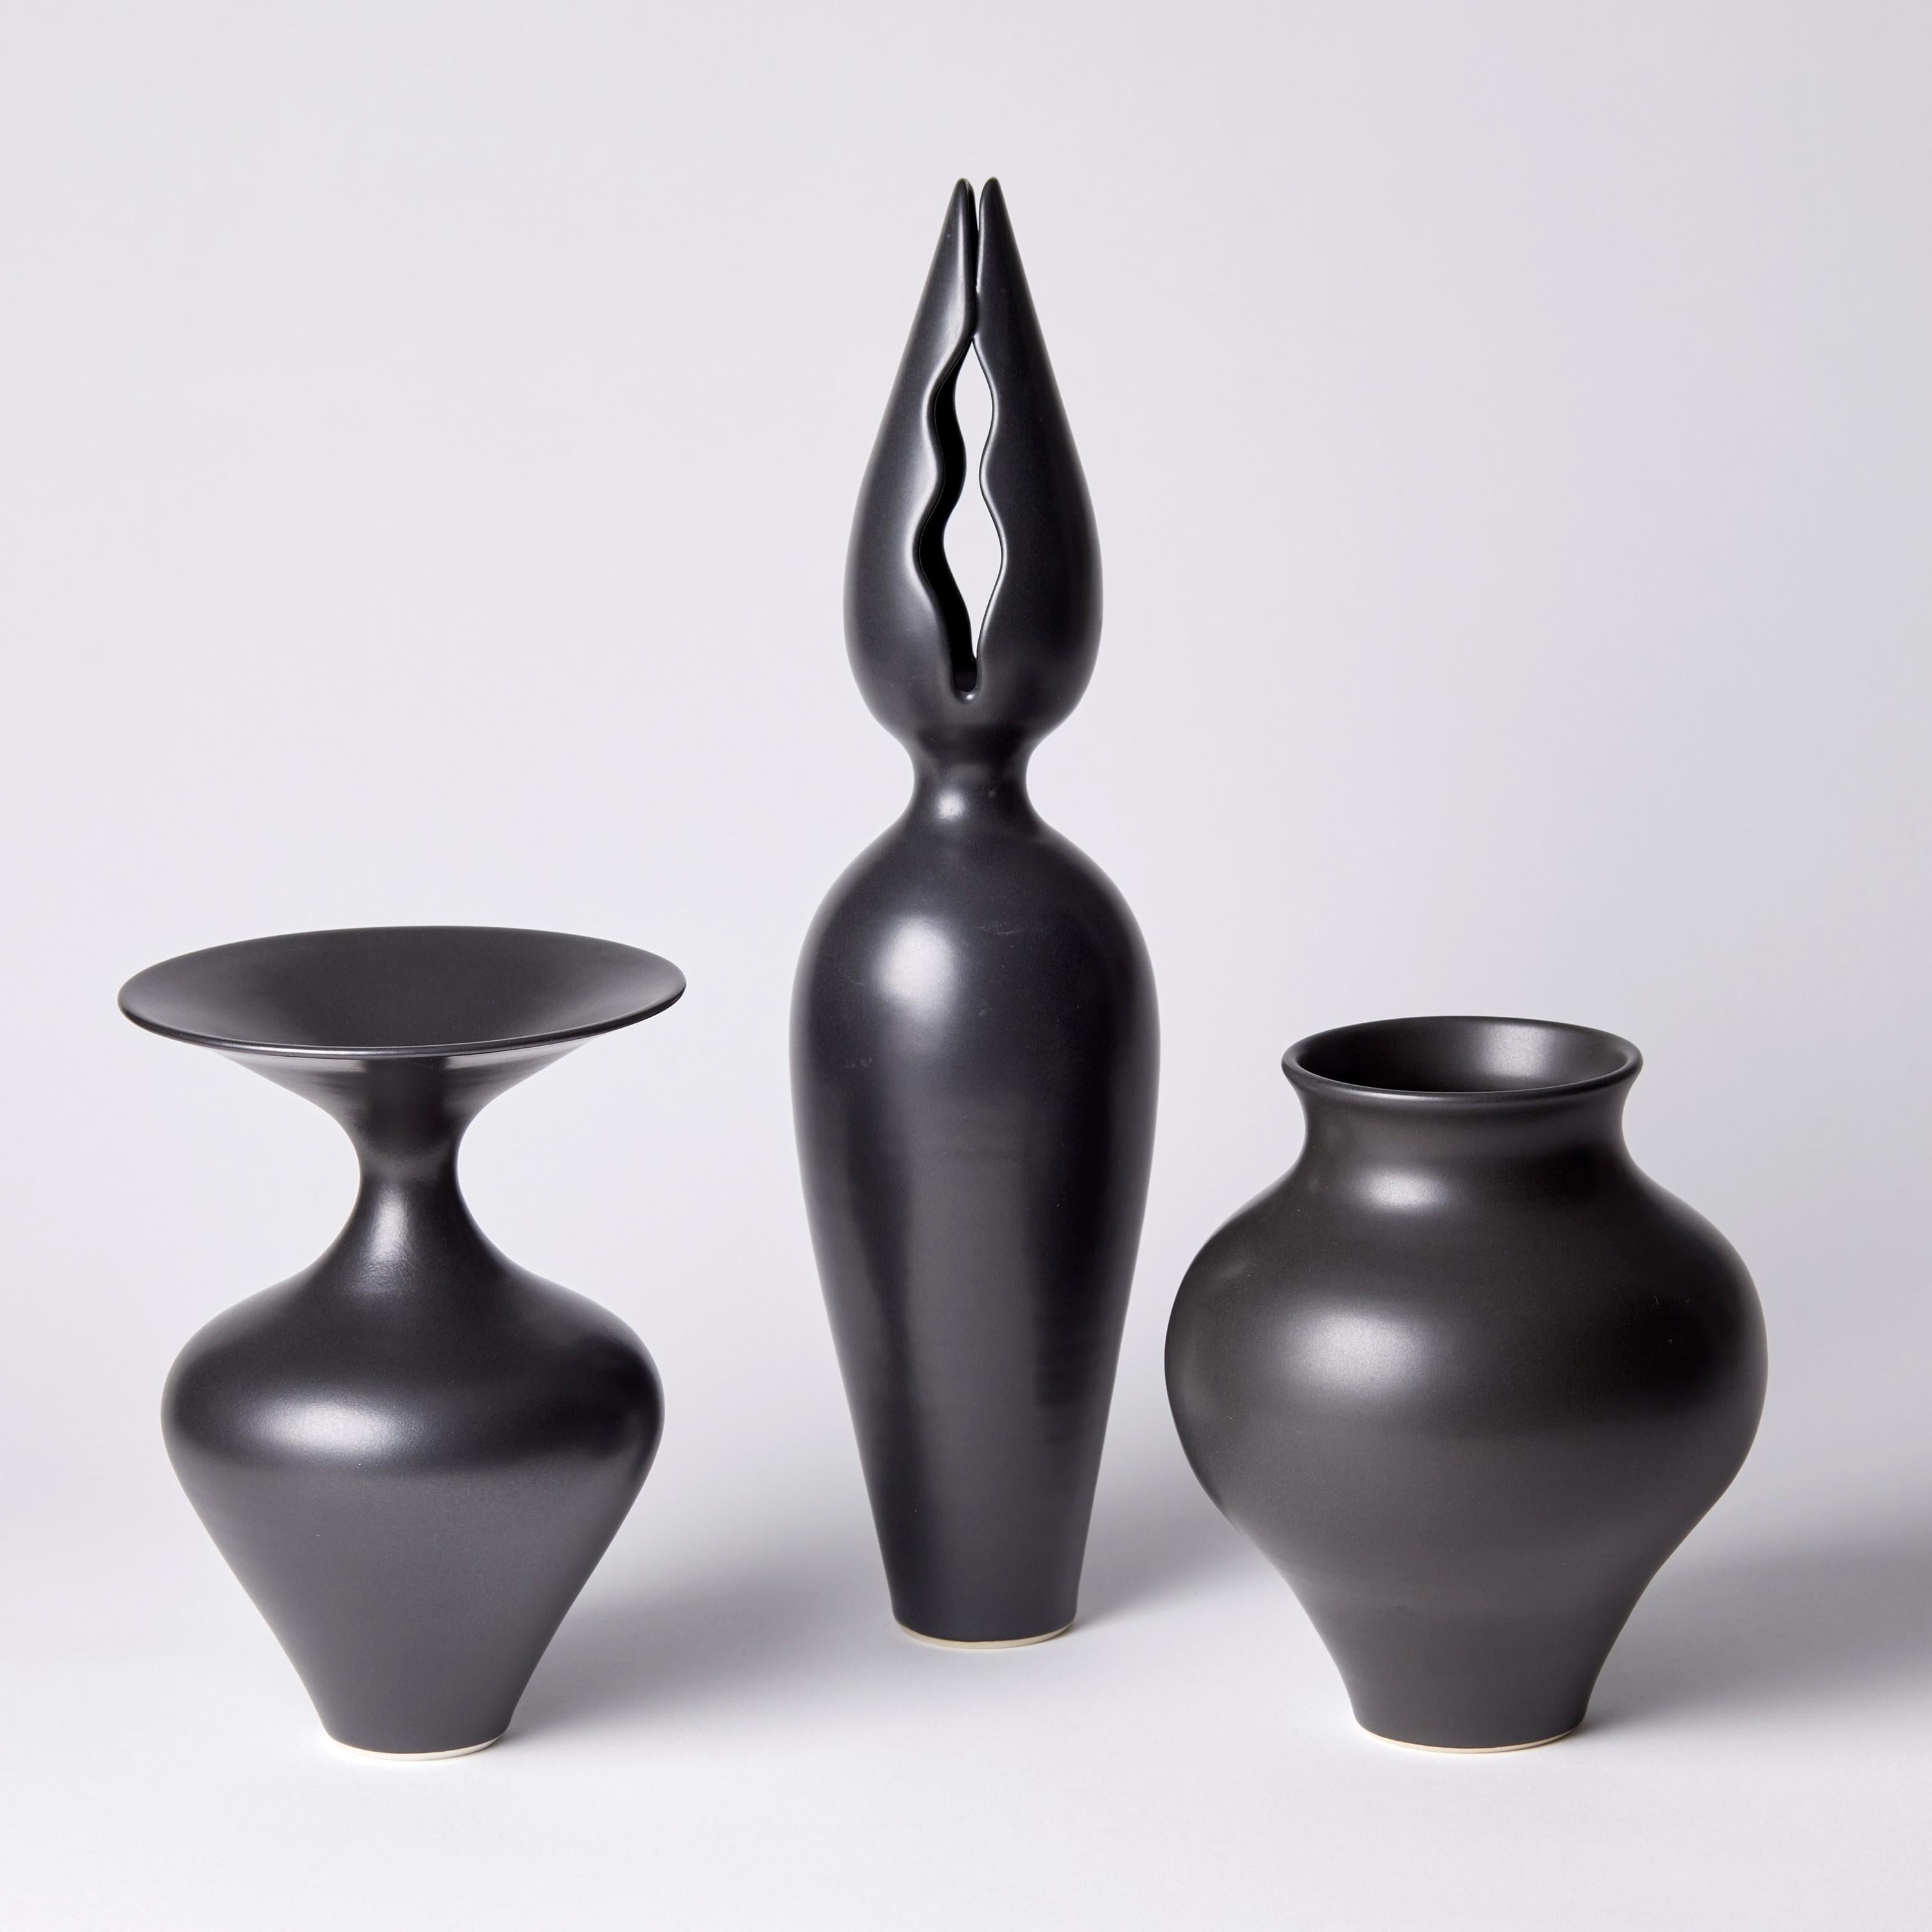 British Balluster Vase, a unique black / ebony porcelain vase by Vivienne Foley